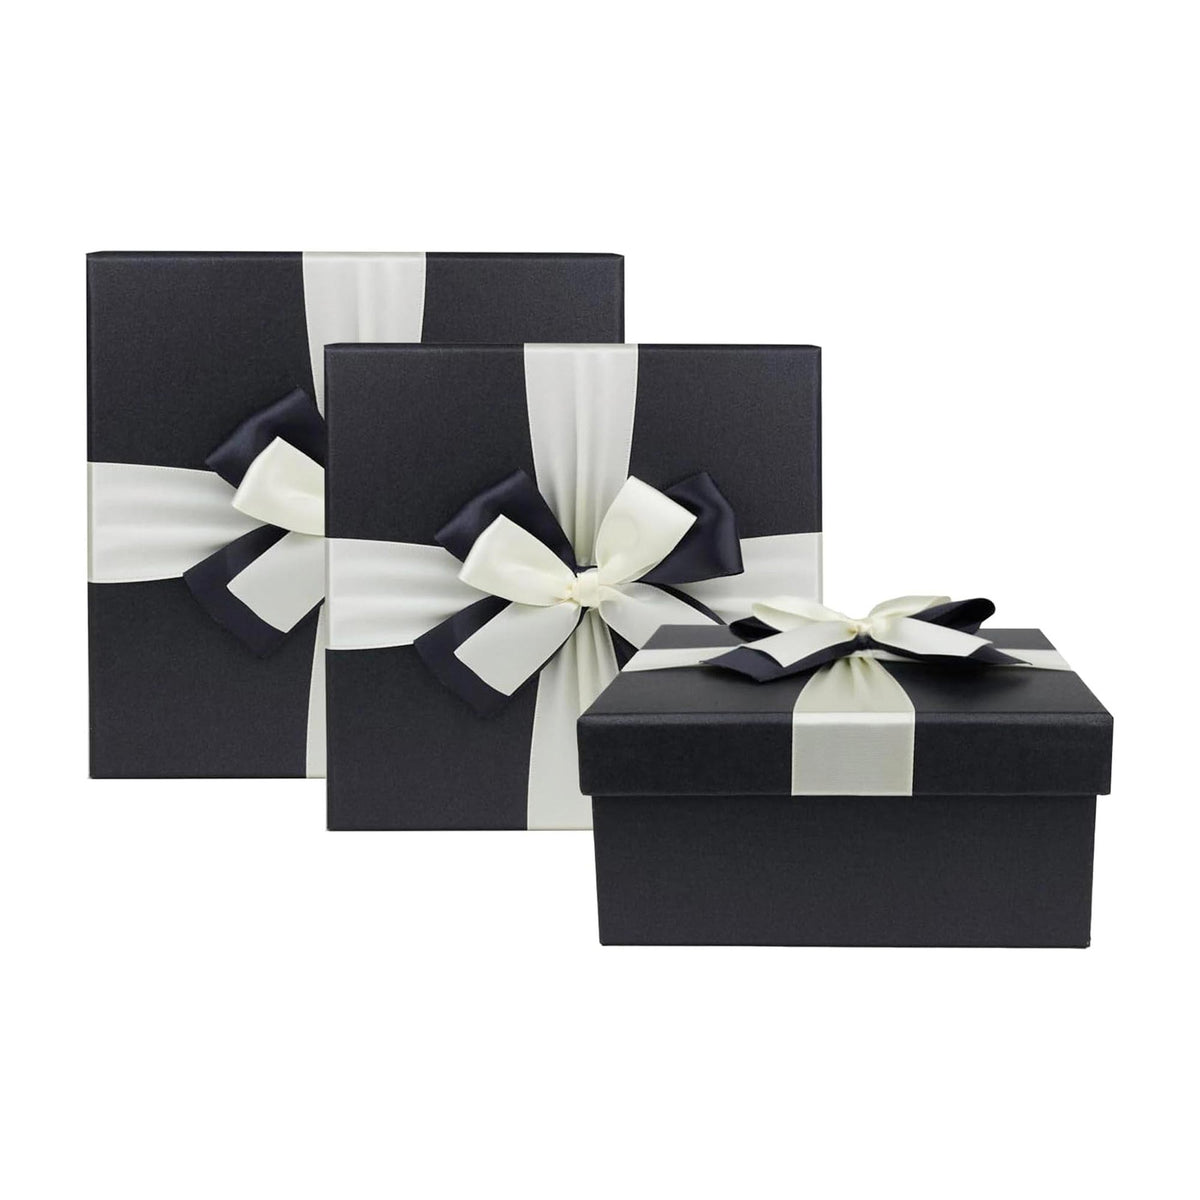 Set of 3 Black Gift Boxes with Cream Satin Ribbon